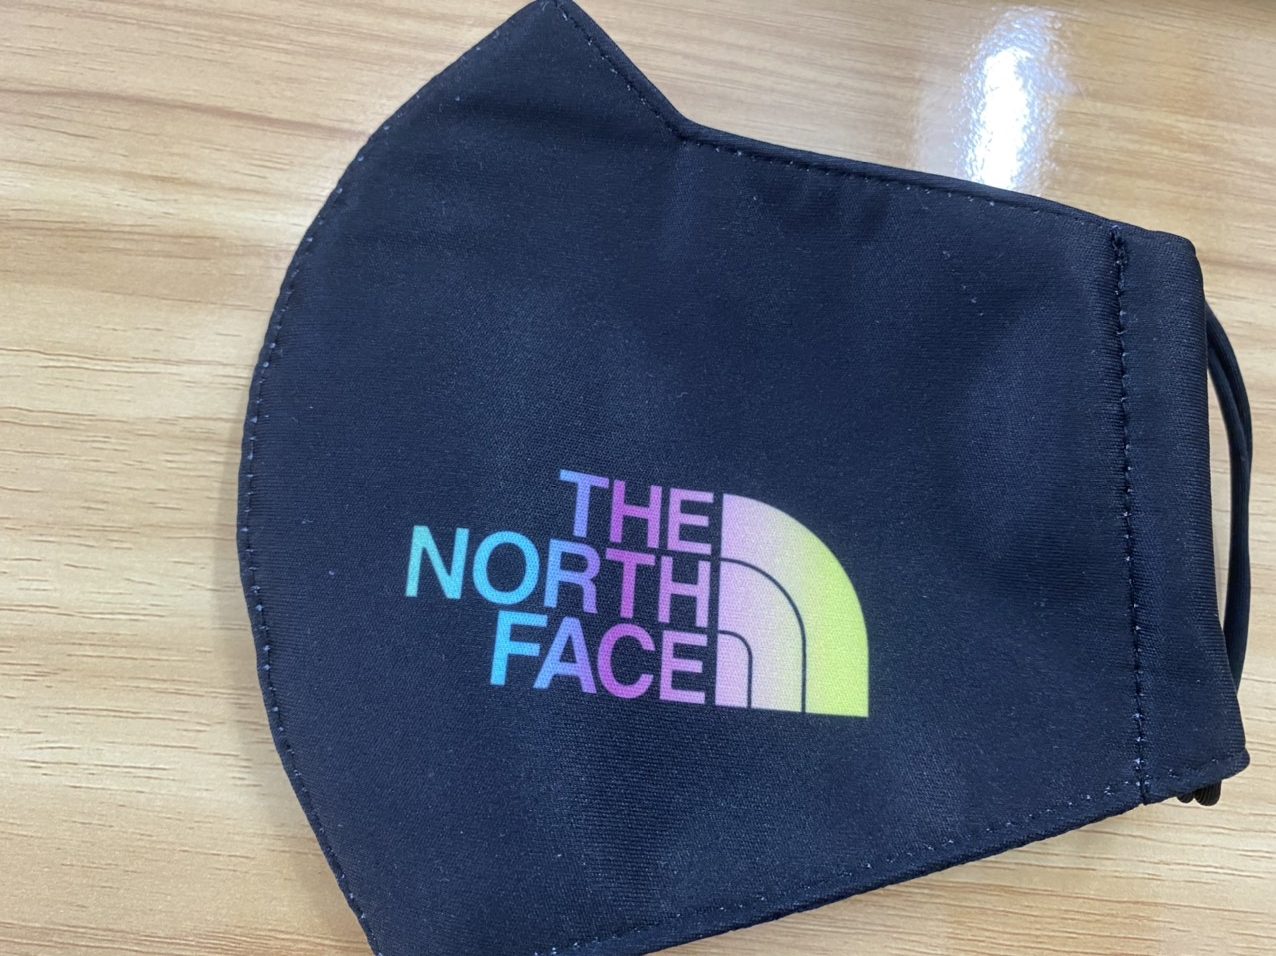 khau trang vai in logo the north face 2 lop mau khau trang in 3d logo the north face nen xanh rotated